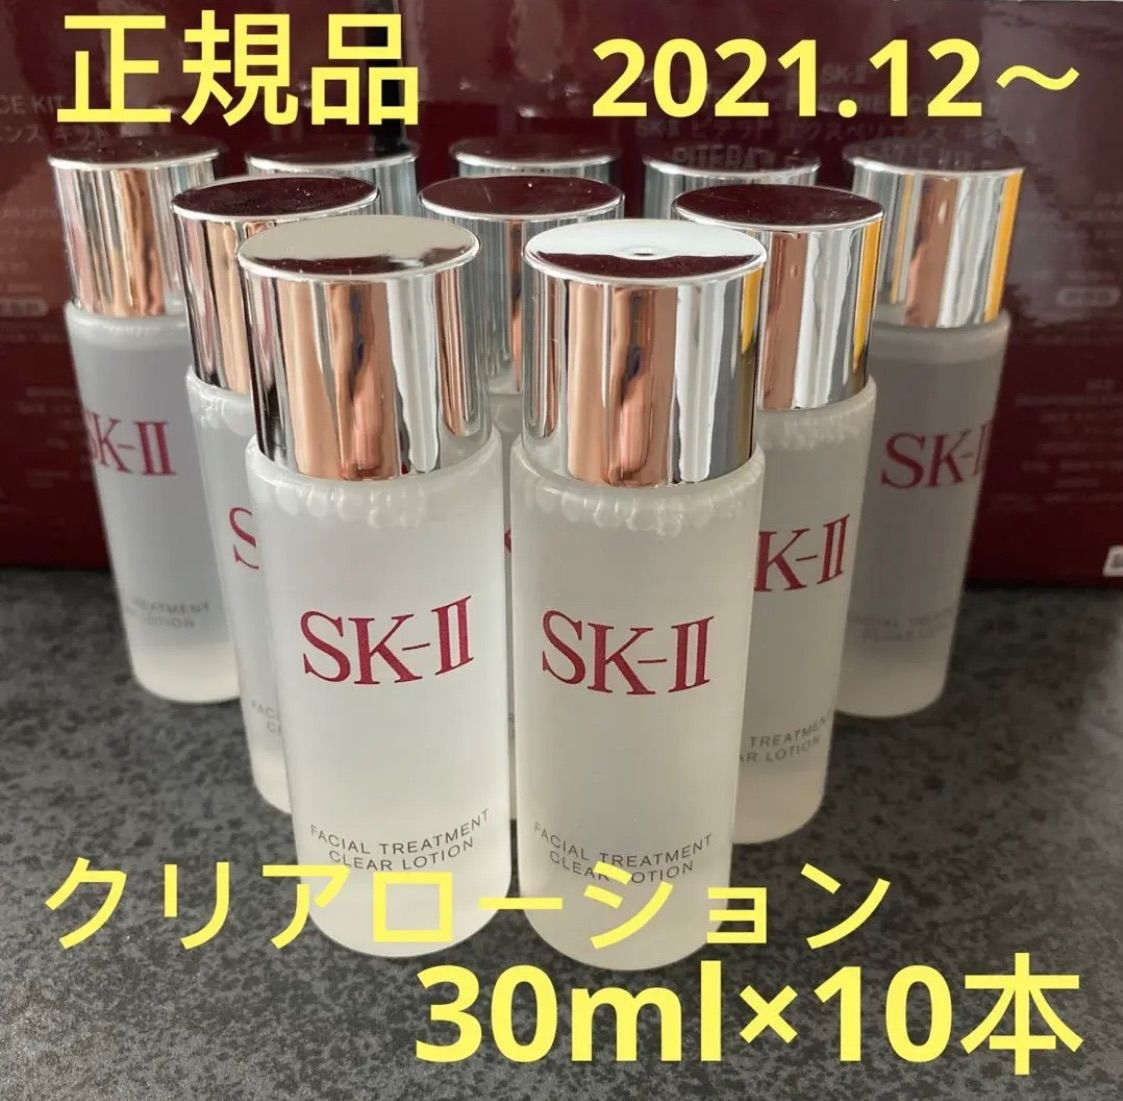 SK-II フェイシャルトリートメント クリアローション(ふきとり用化粧水) 30ml x 10本